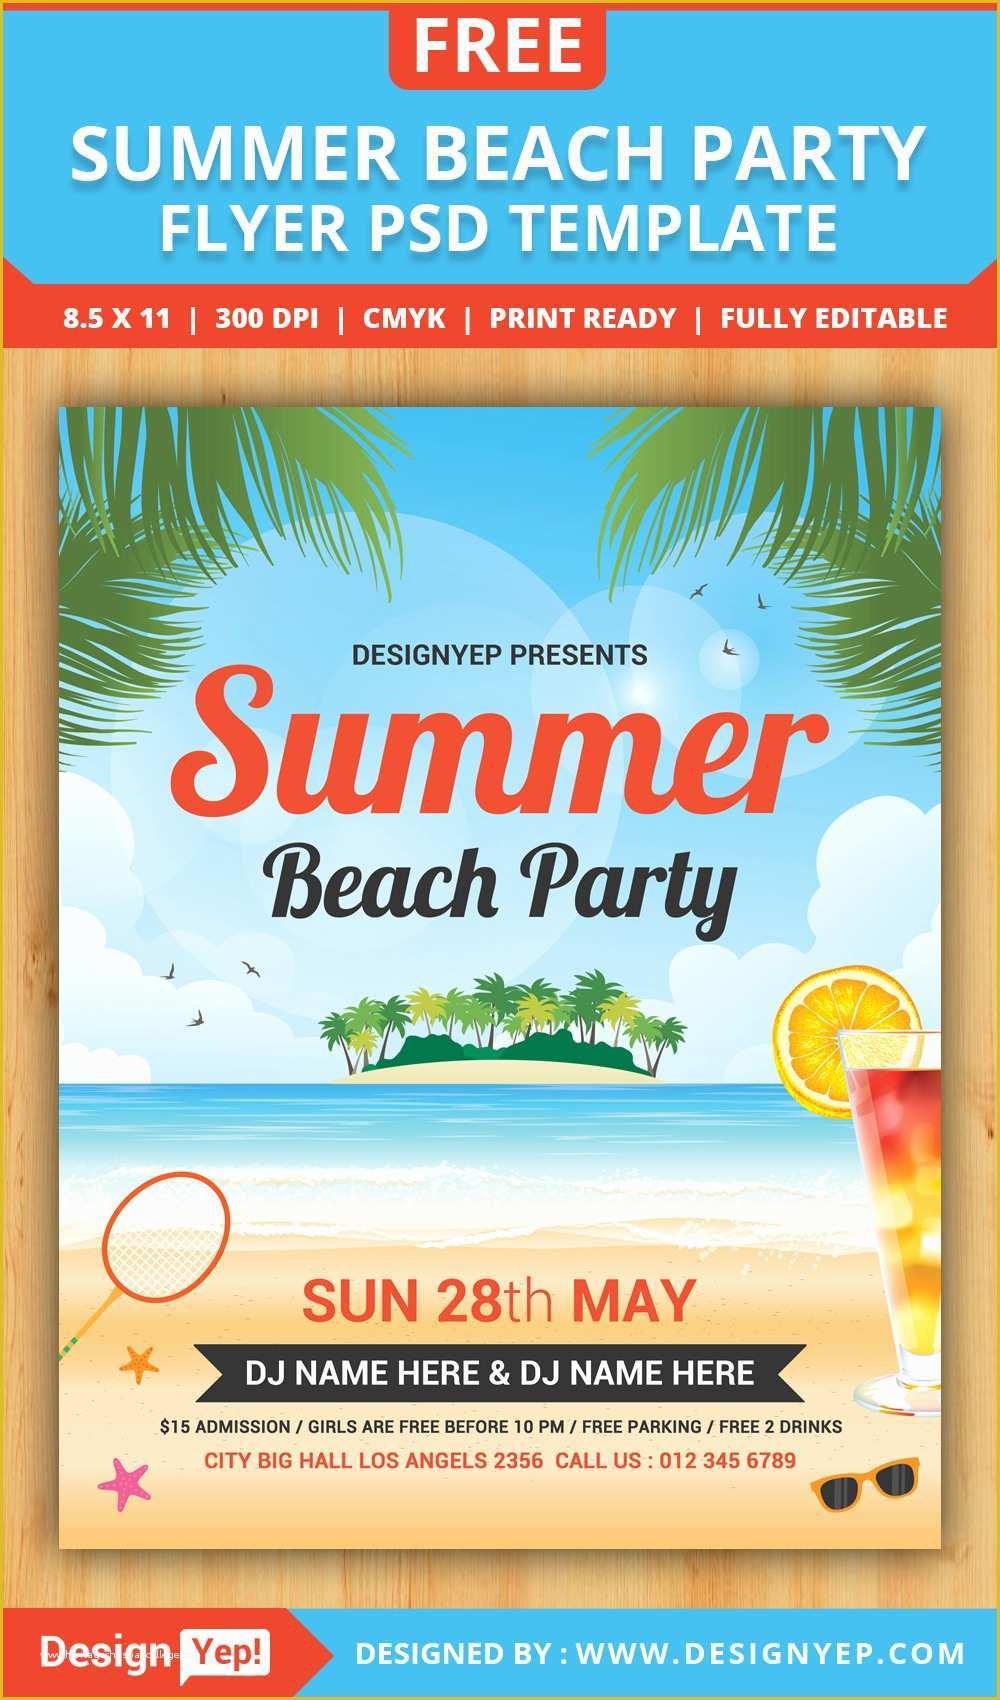 Free Flyer Templates Online Of Free Summer Beach Party Flyer Psd Template Designyep